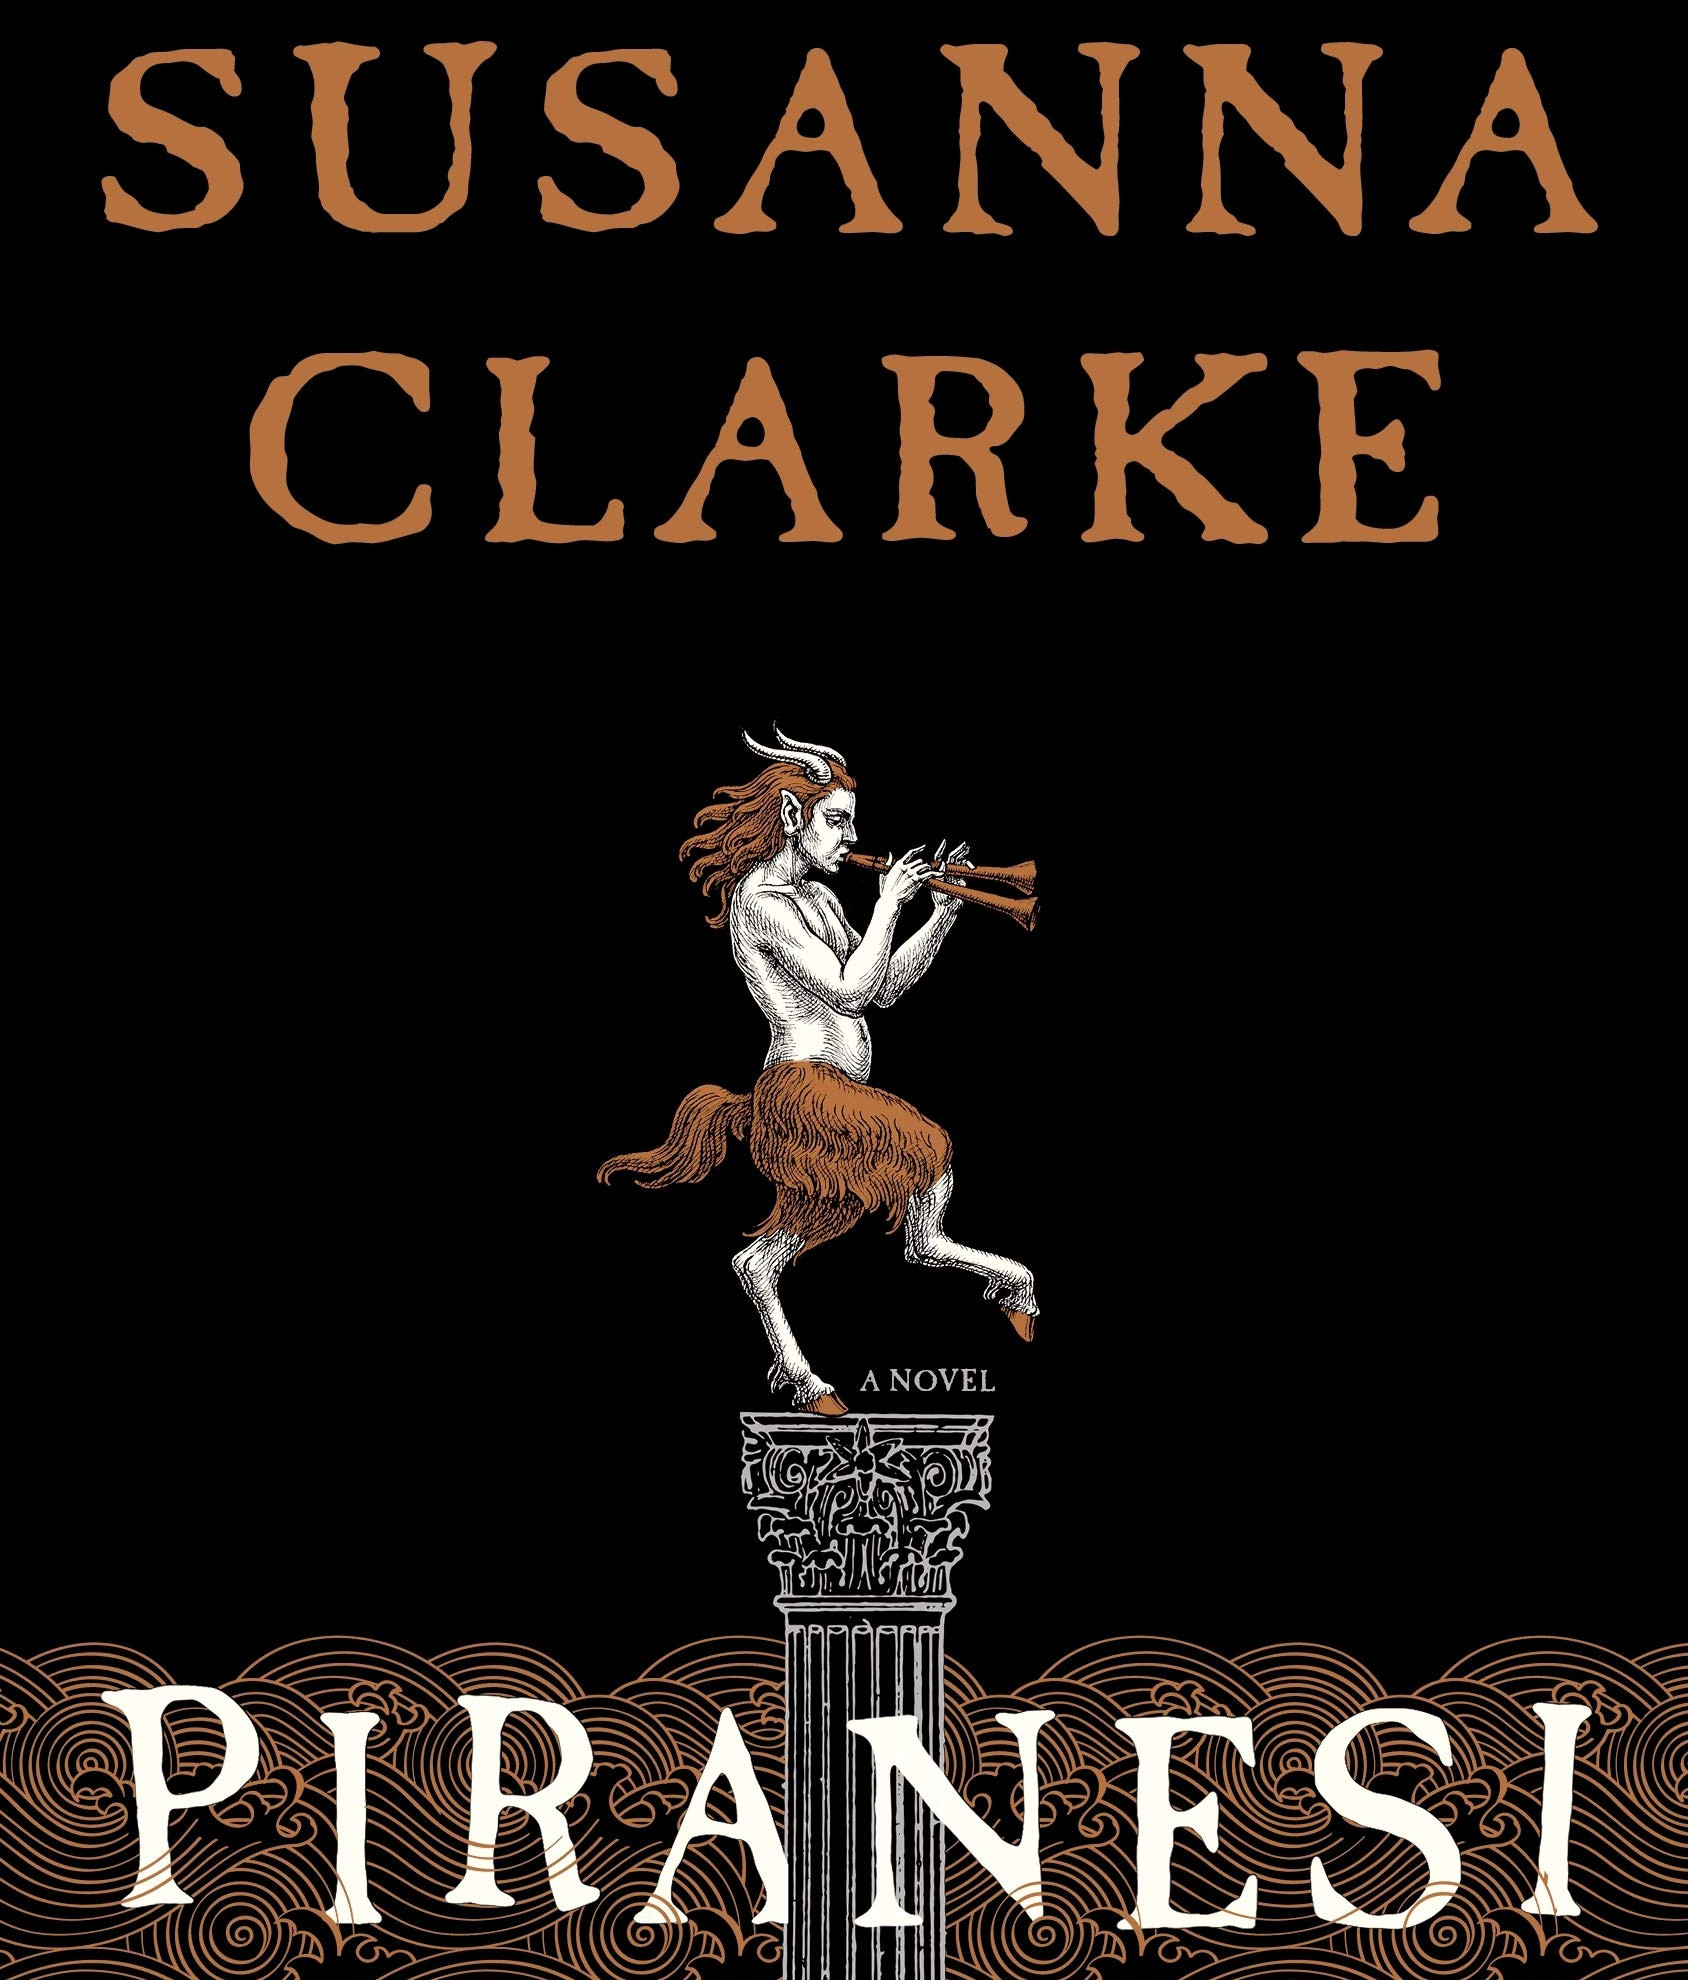 94. (November 2020) Piranesi by Susanna Clarke